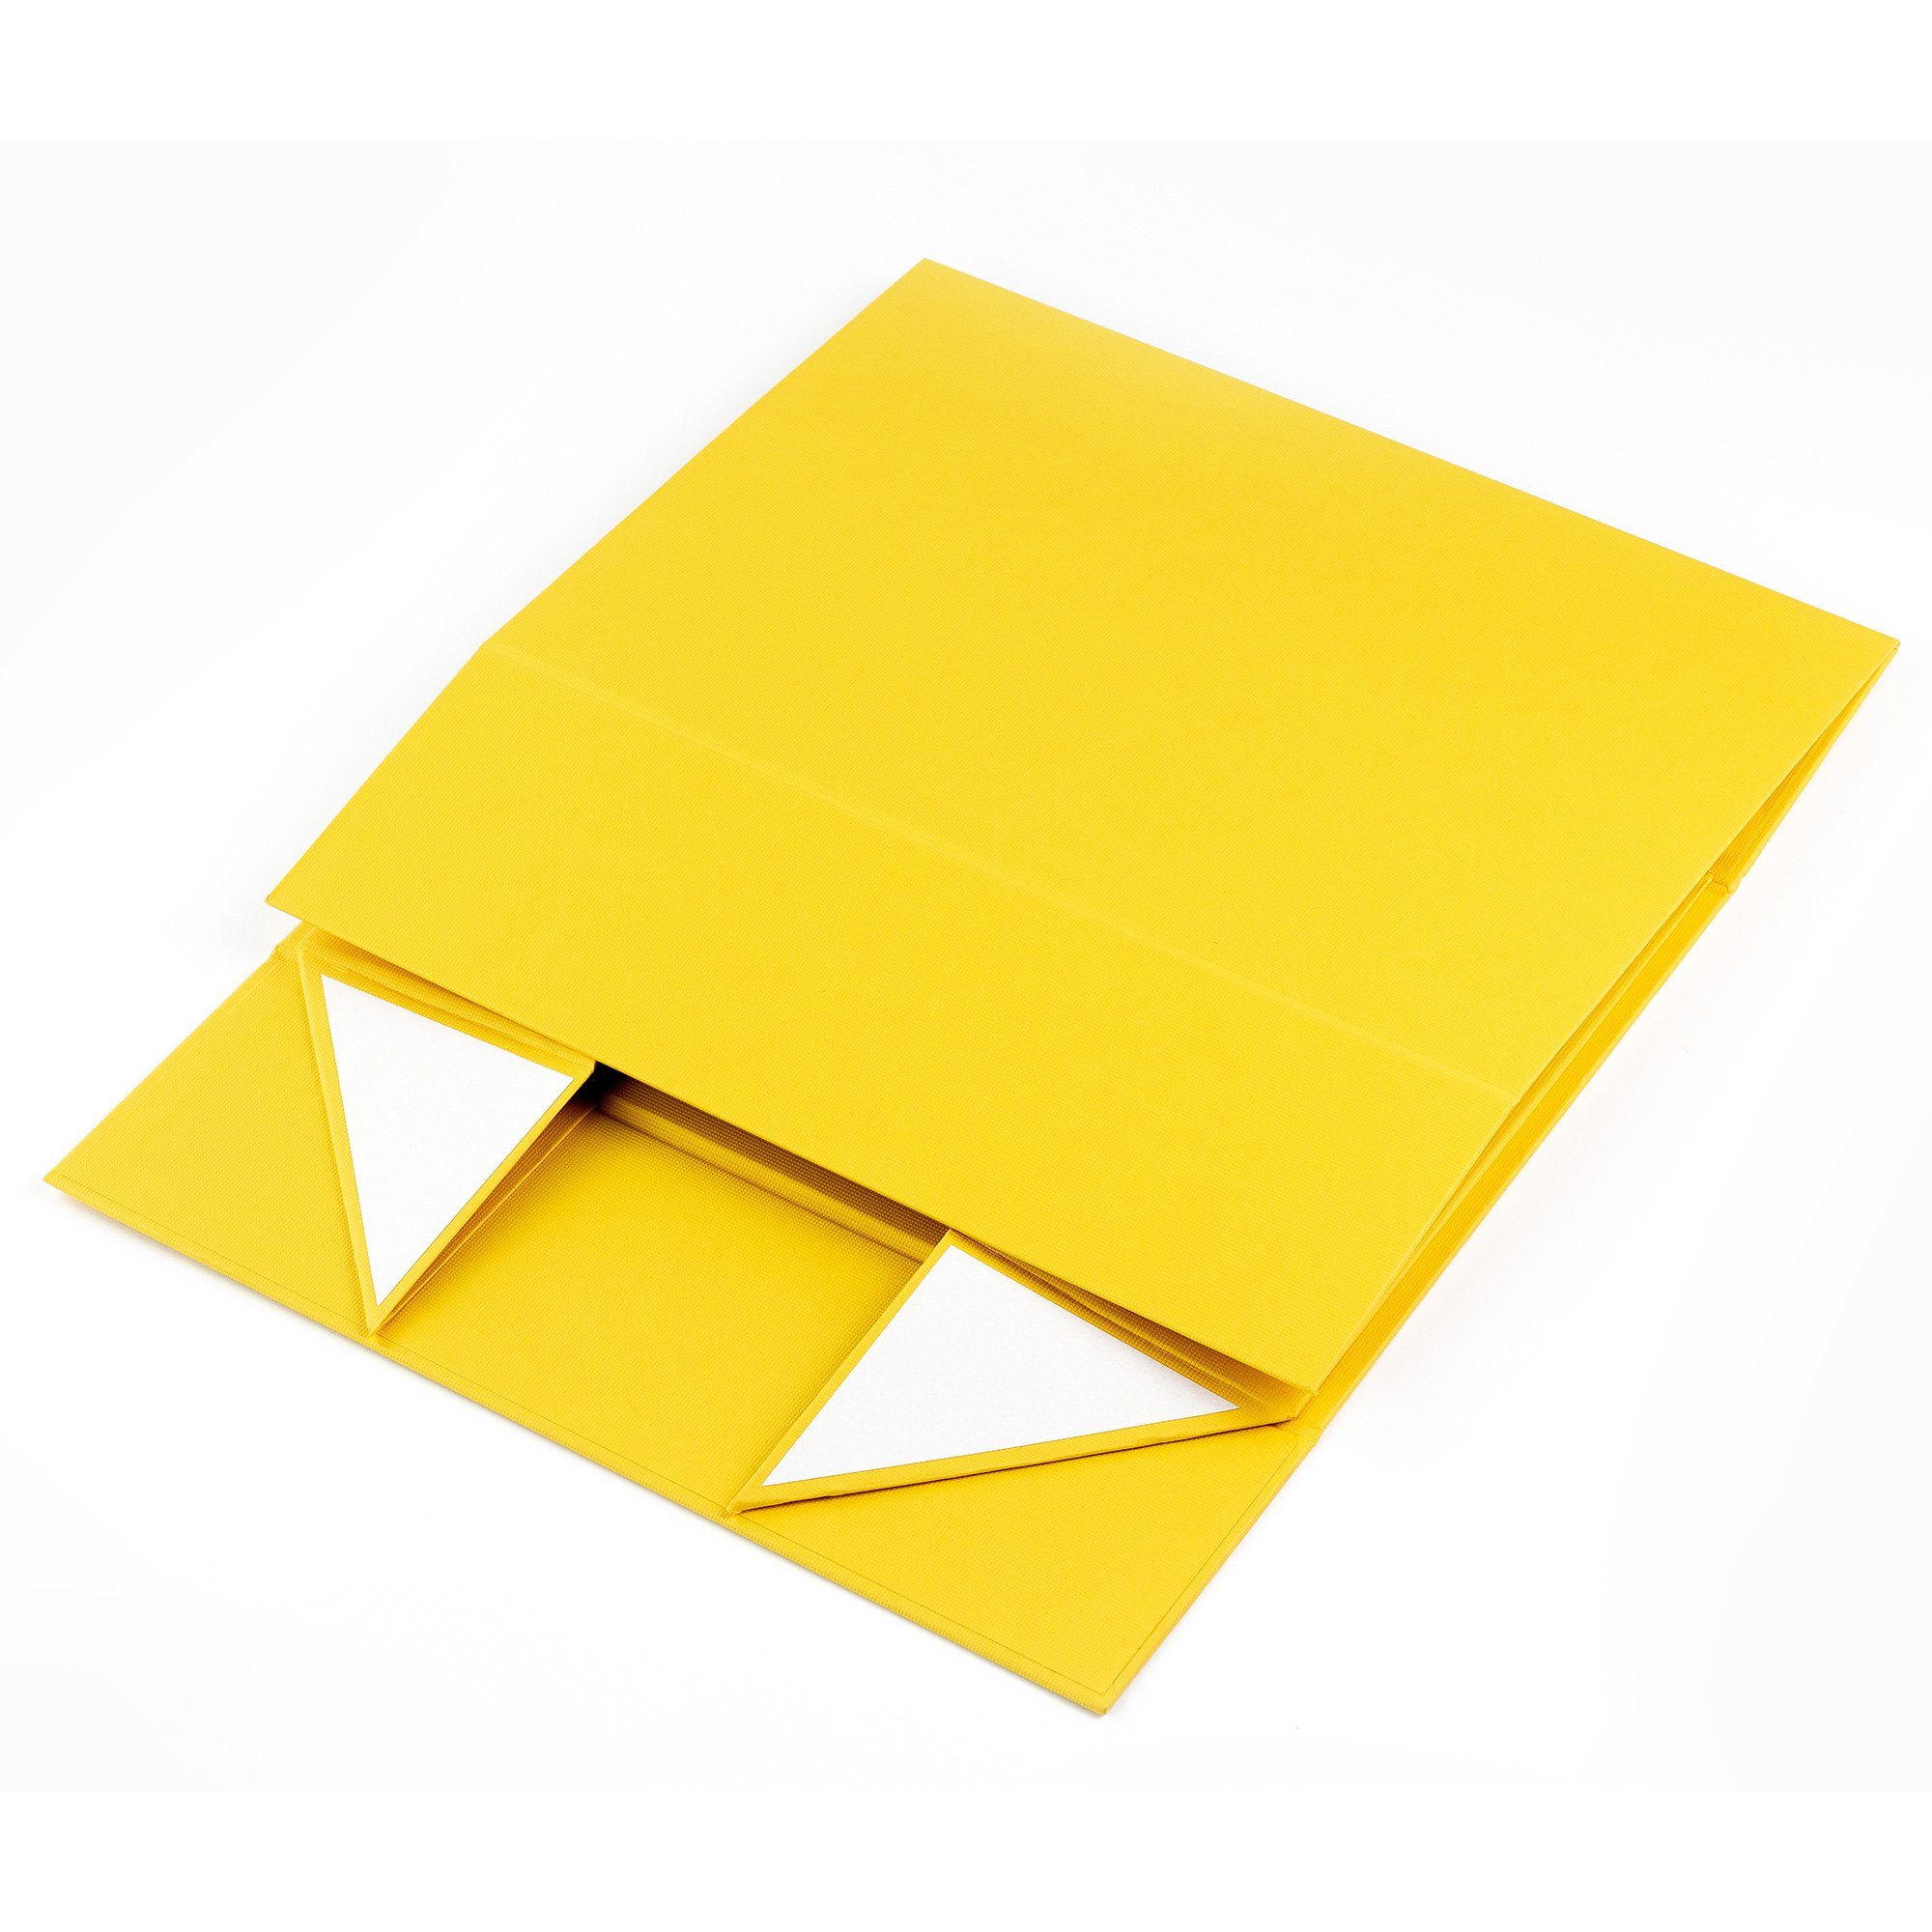 AdelDream Box, Box, Gift Magnetic Aufbewahrungsbox Decorative Reusable Goldgelber Gift Box